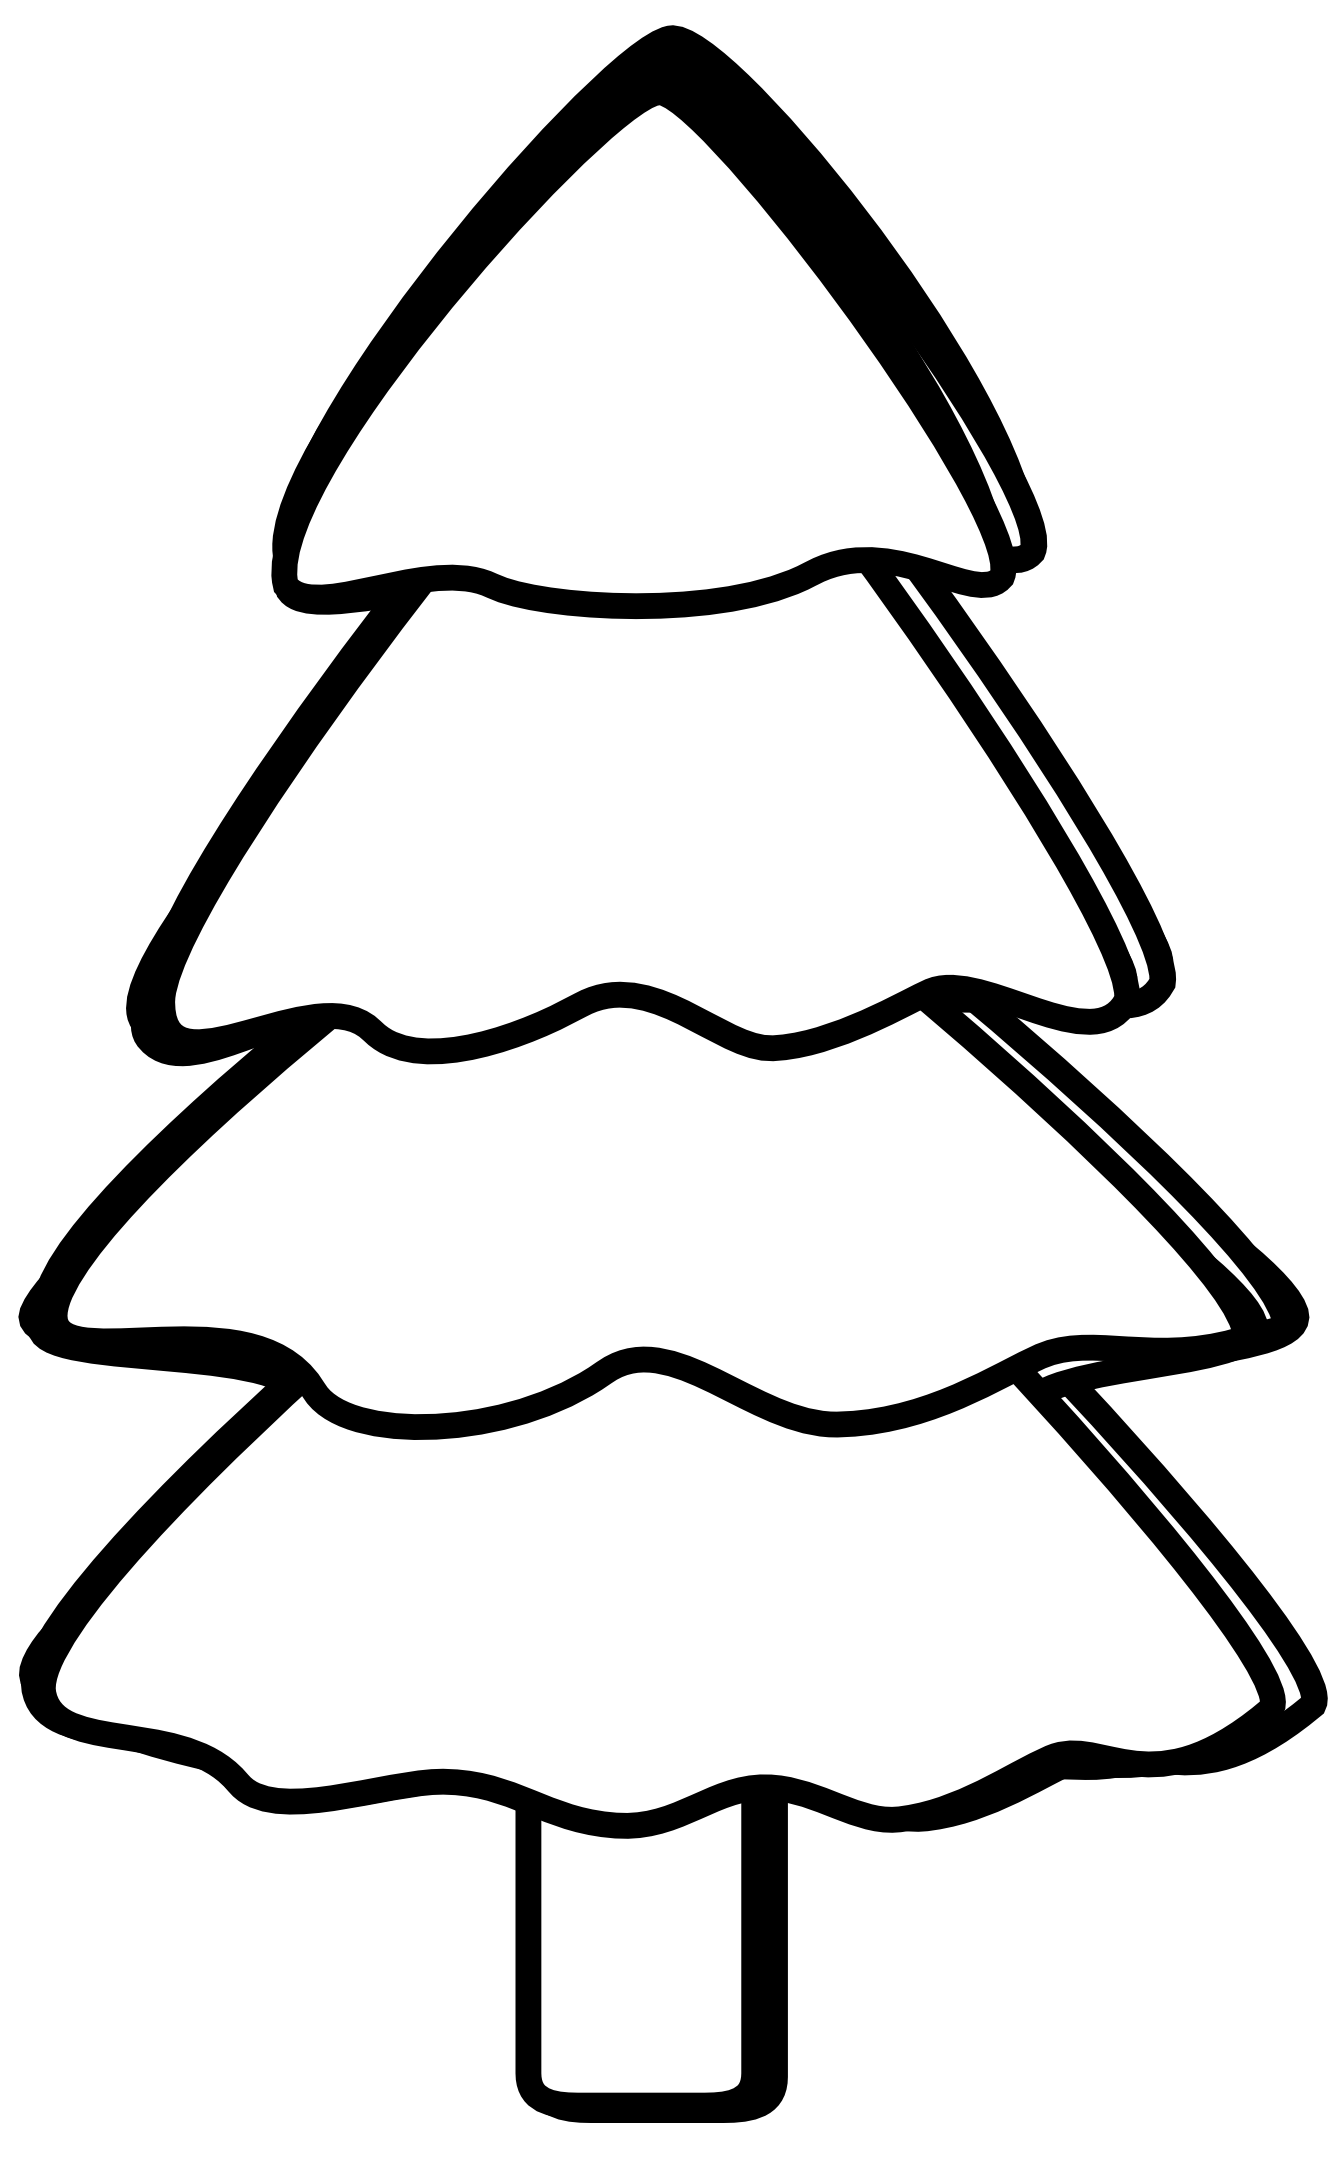 harmonic-tree-black-white-line-art-christmas-xmas-coloring-book-clipart-best-clipart-best